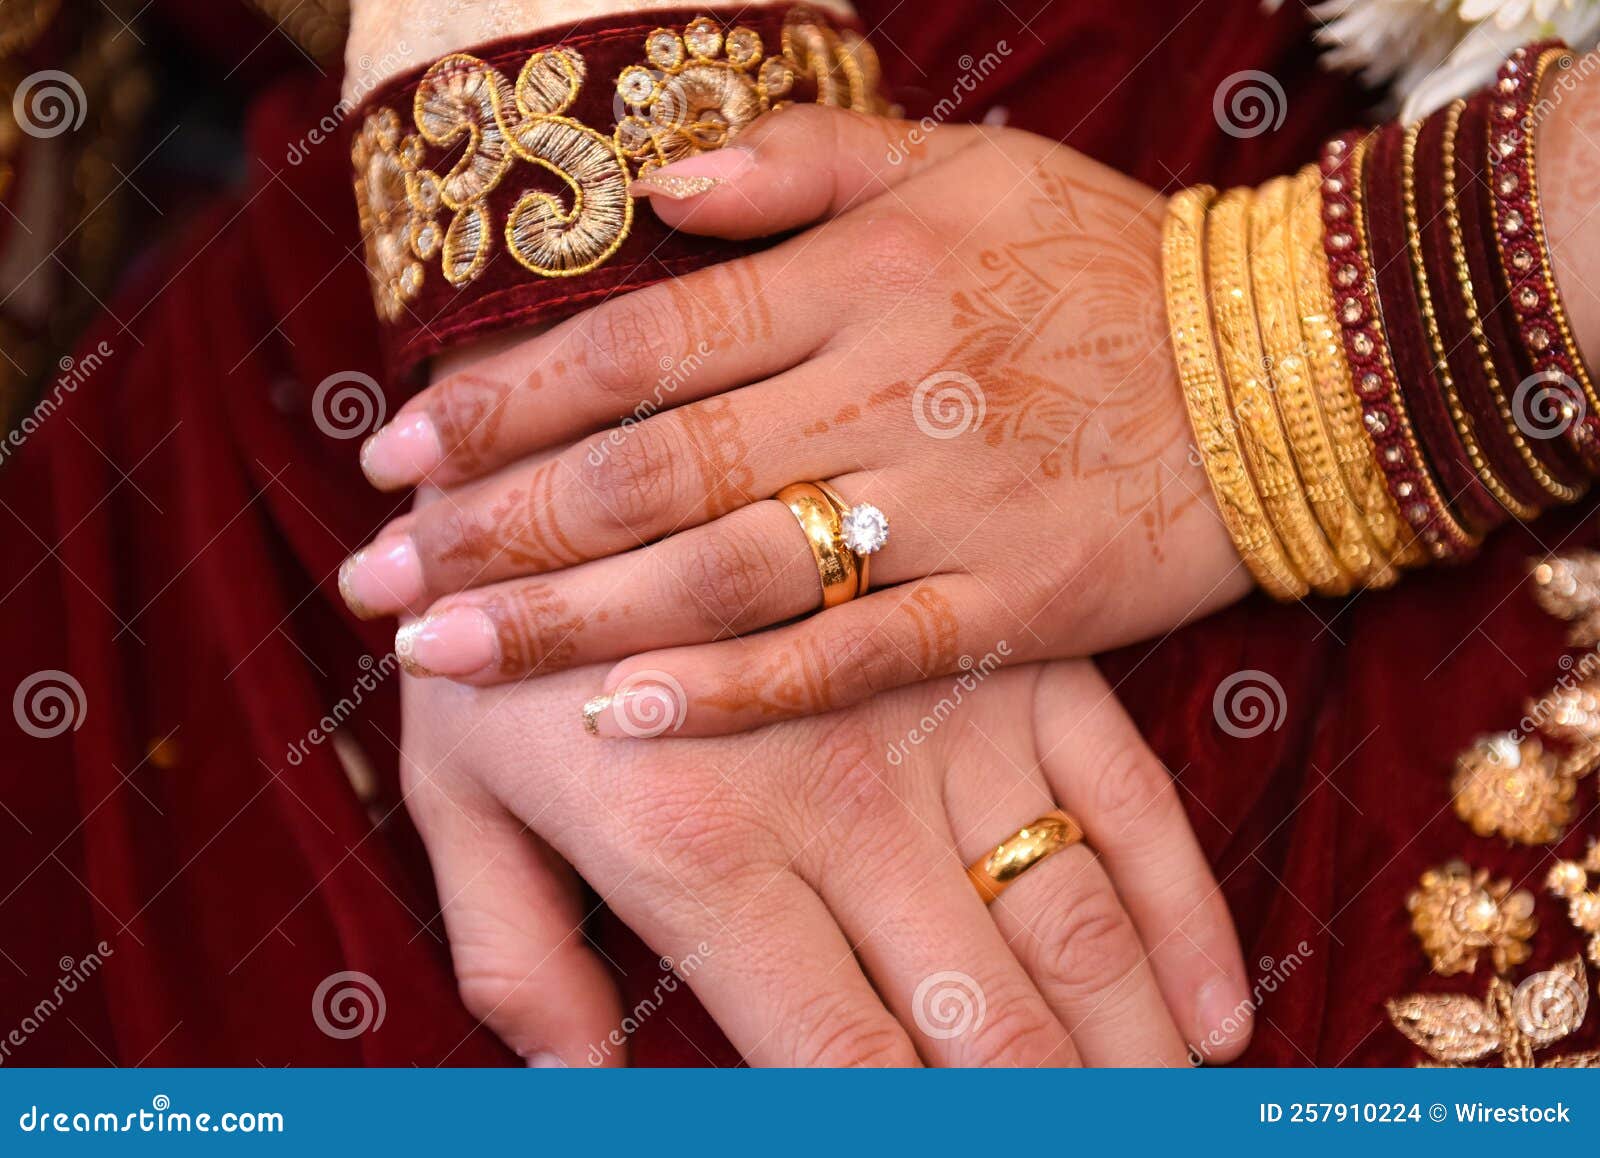 ring ceremony Images • V@!$h.... ☺ (@vaishhhh1) on ShareChat